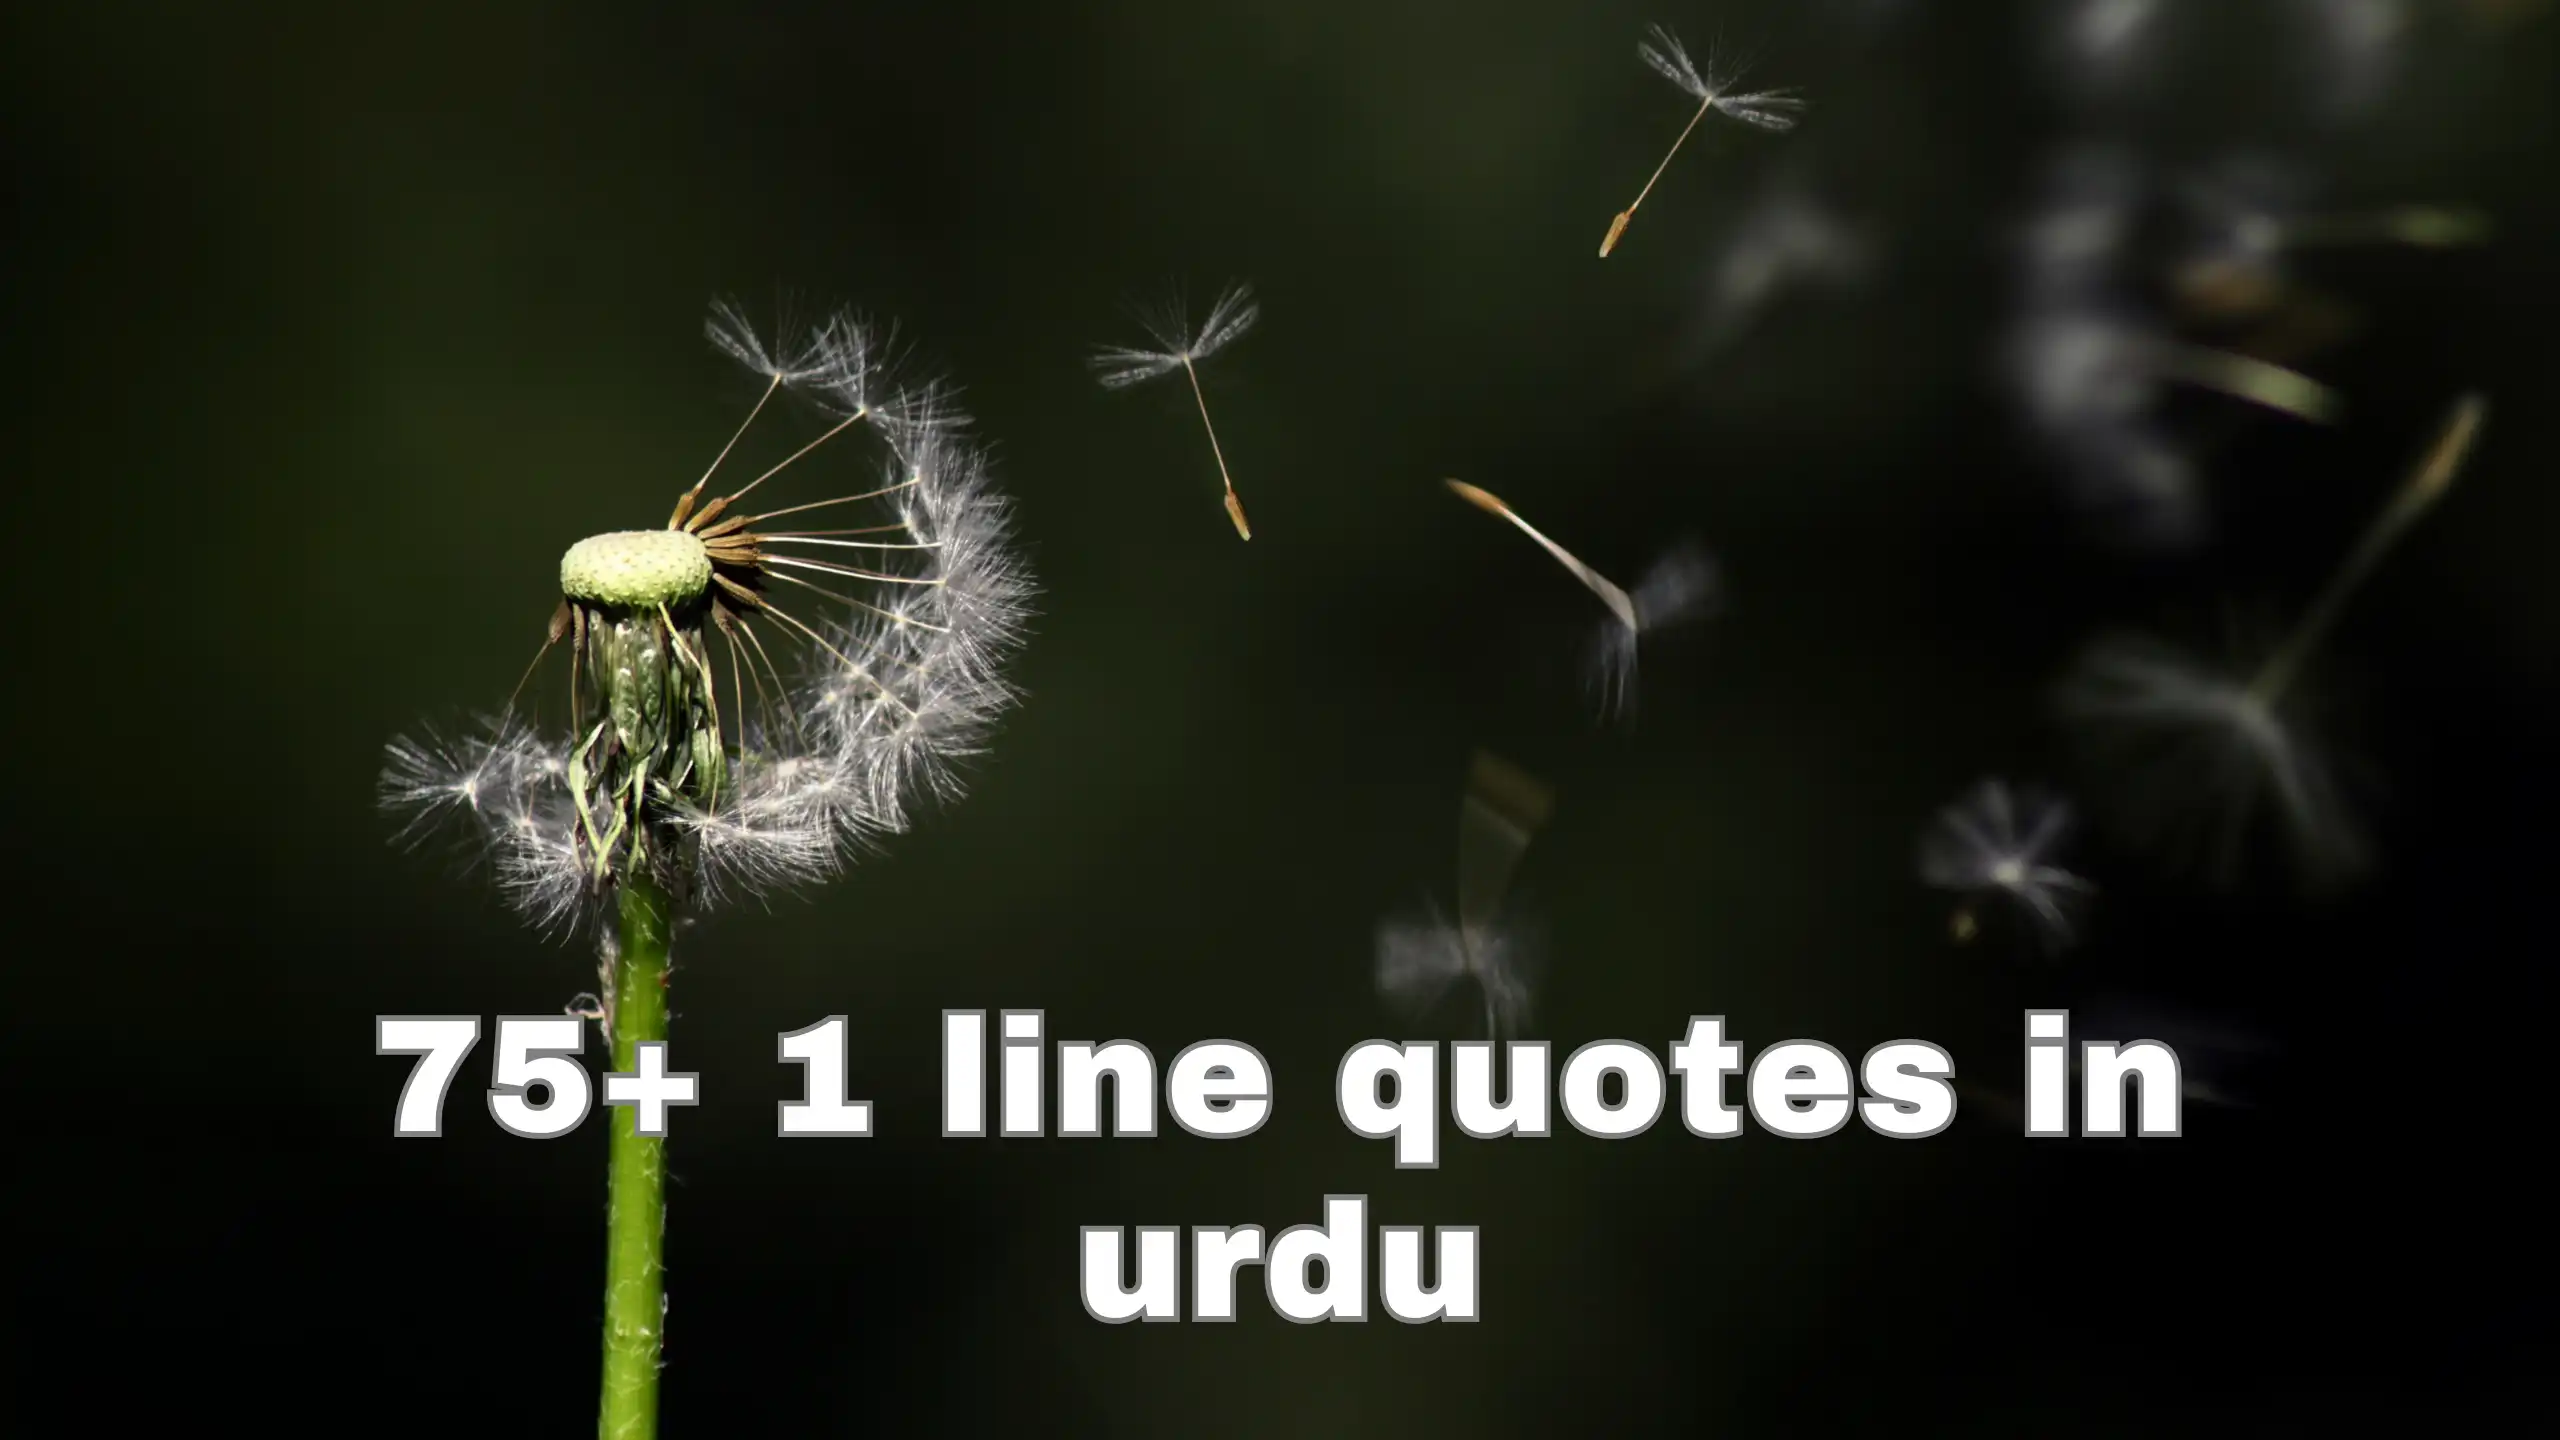 1 line quotes in urdu